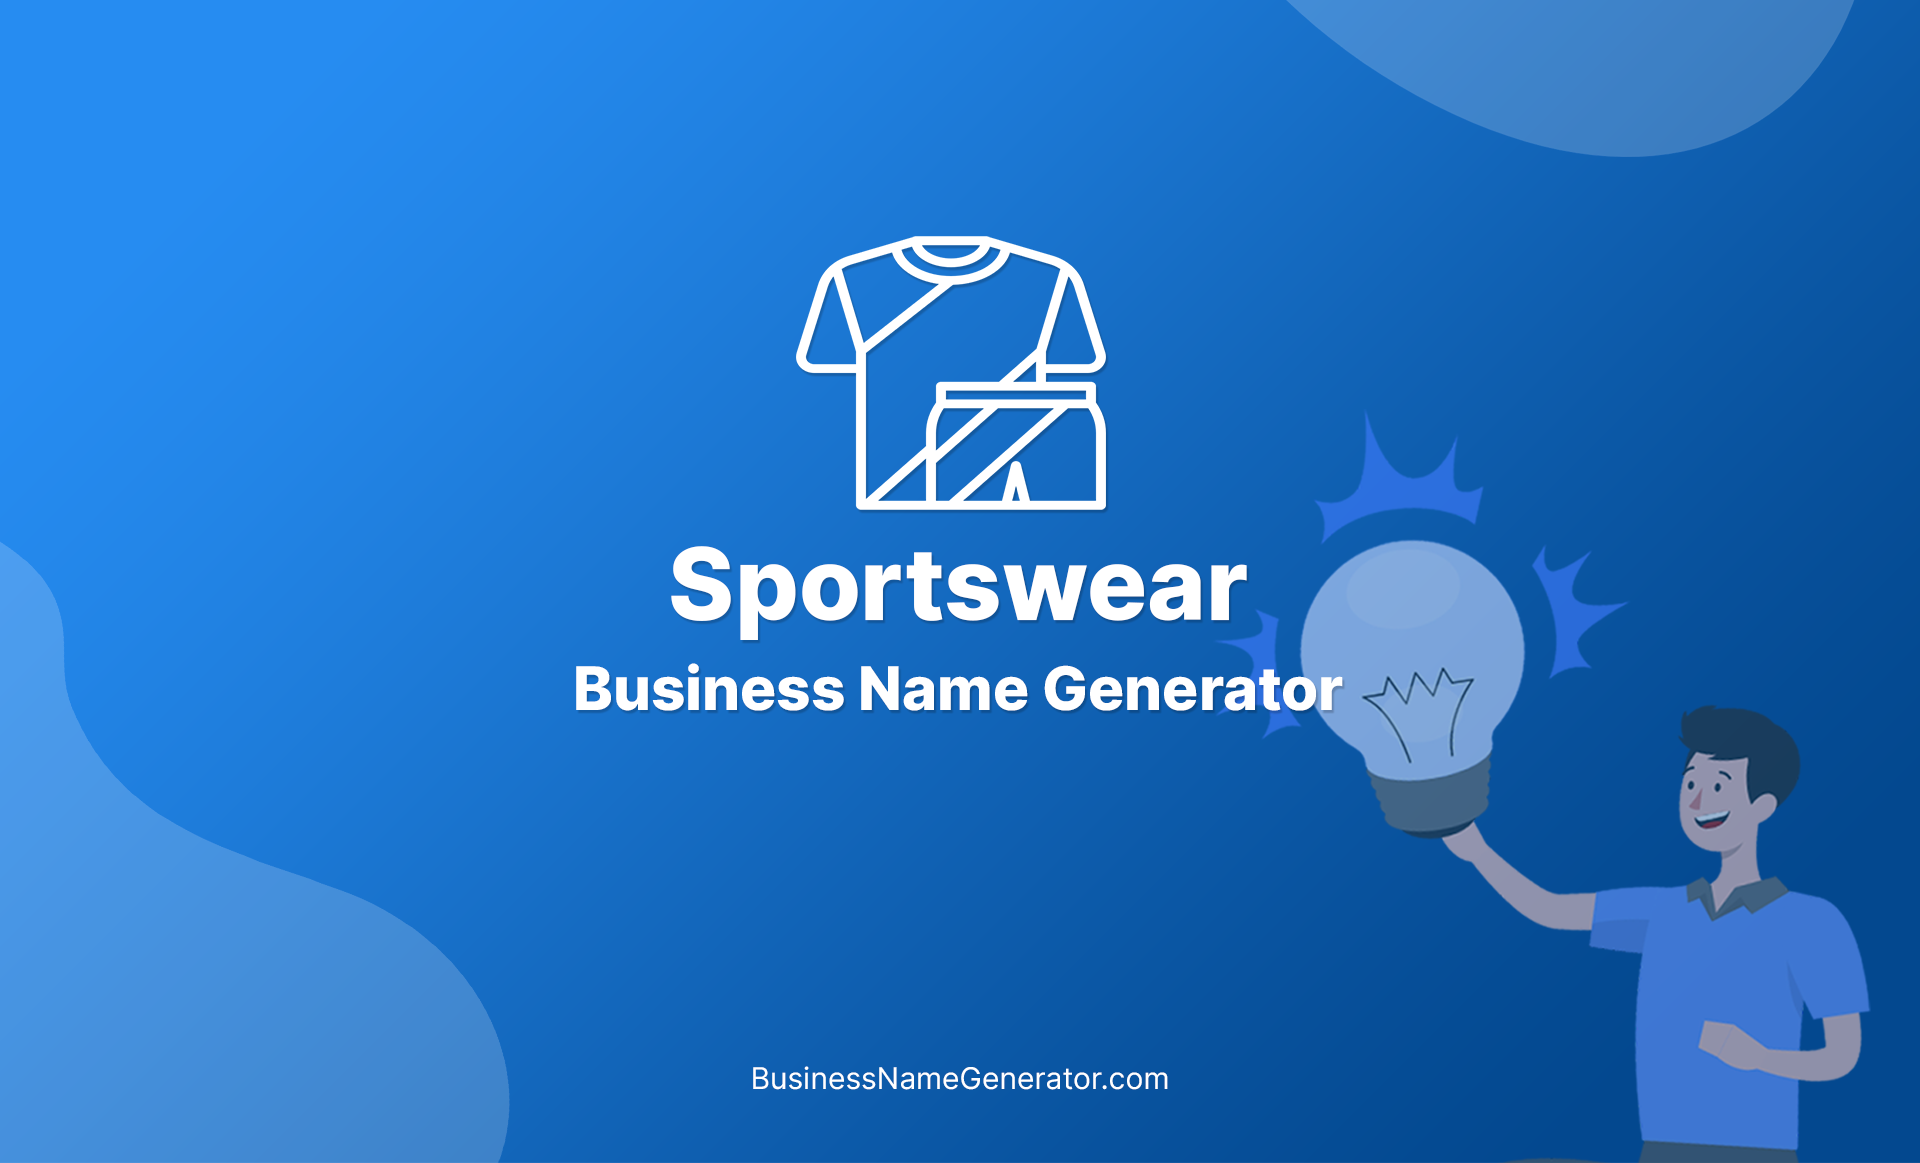 Sportswear Business Name Generator